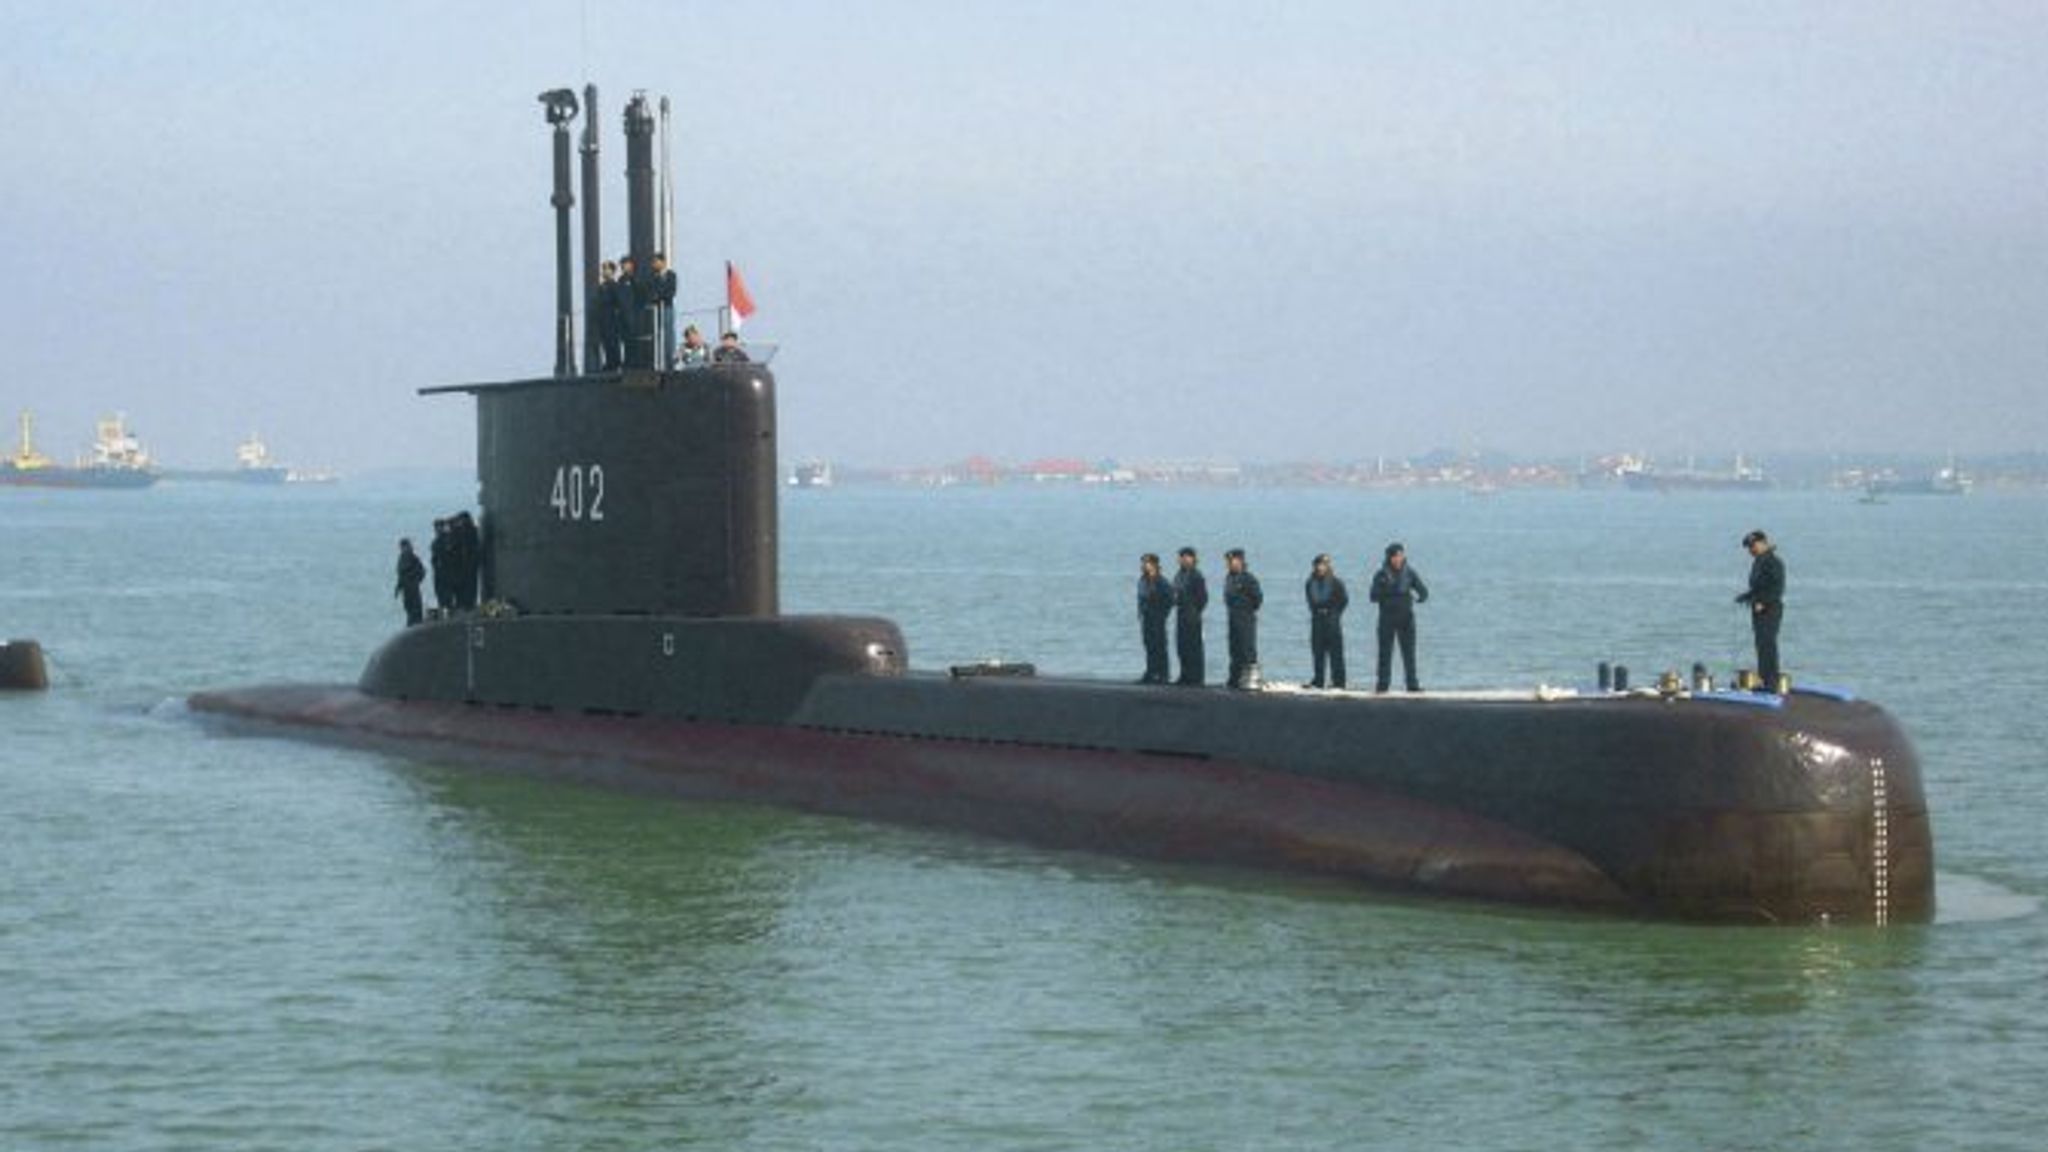 Indonesia submarine latest news